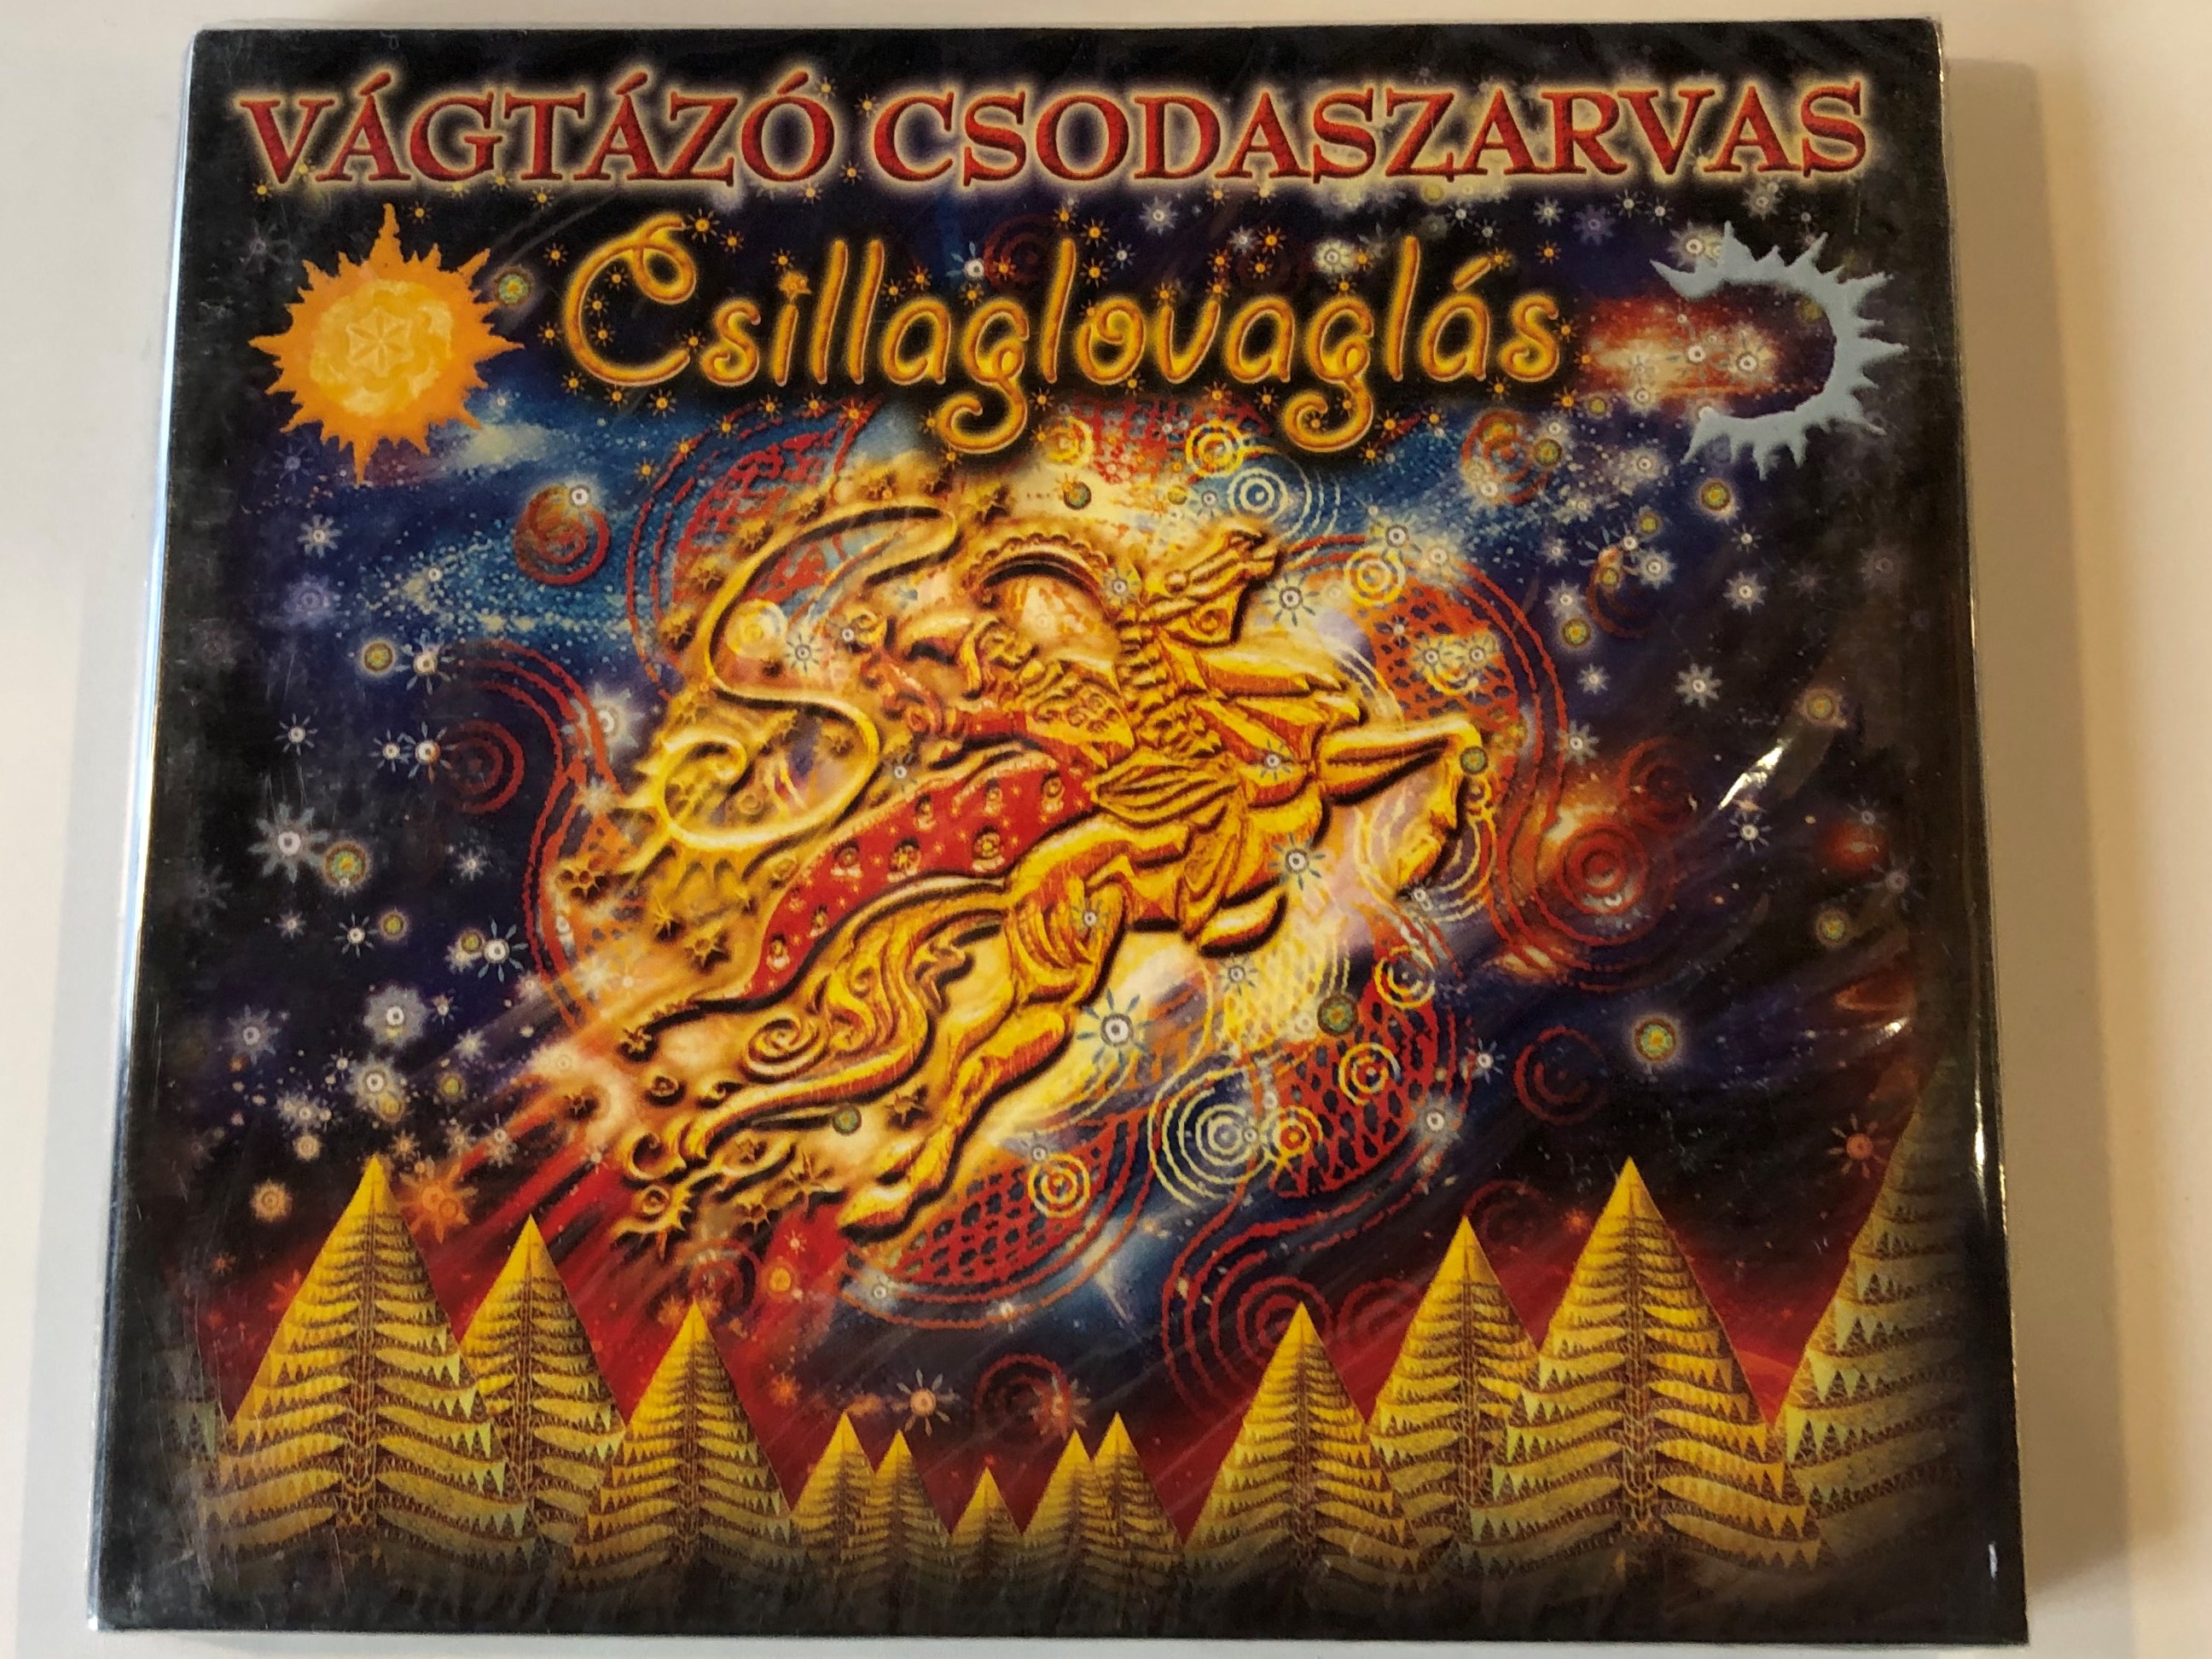 v-gt-z-csodaszarvas-csillaglovagl-s-galloping-wonder-stag-star-ride-fon-records-audio-cd-2011-5998048526123-1-.jpg